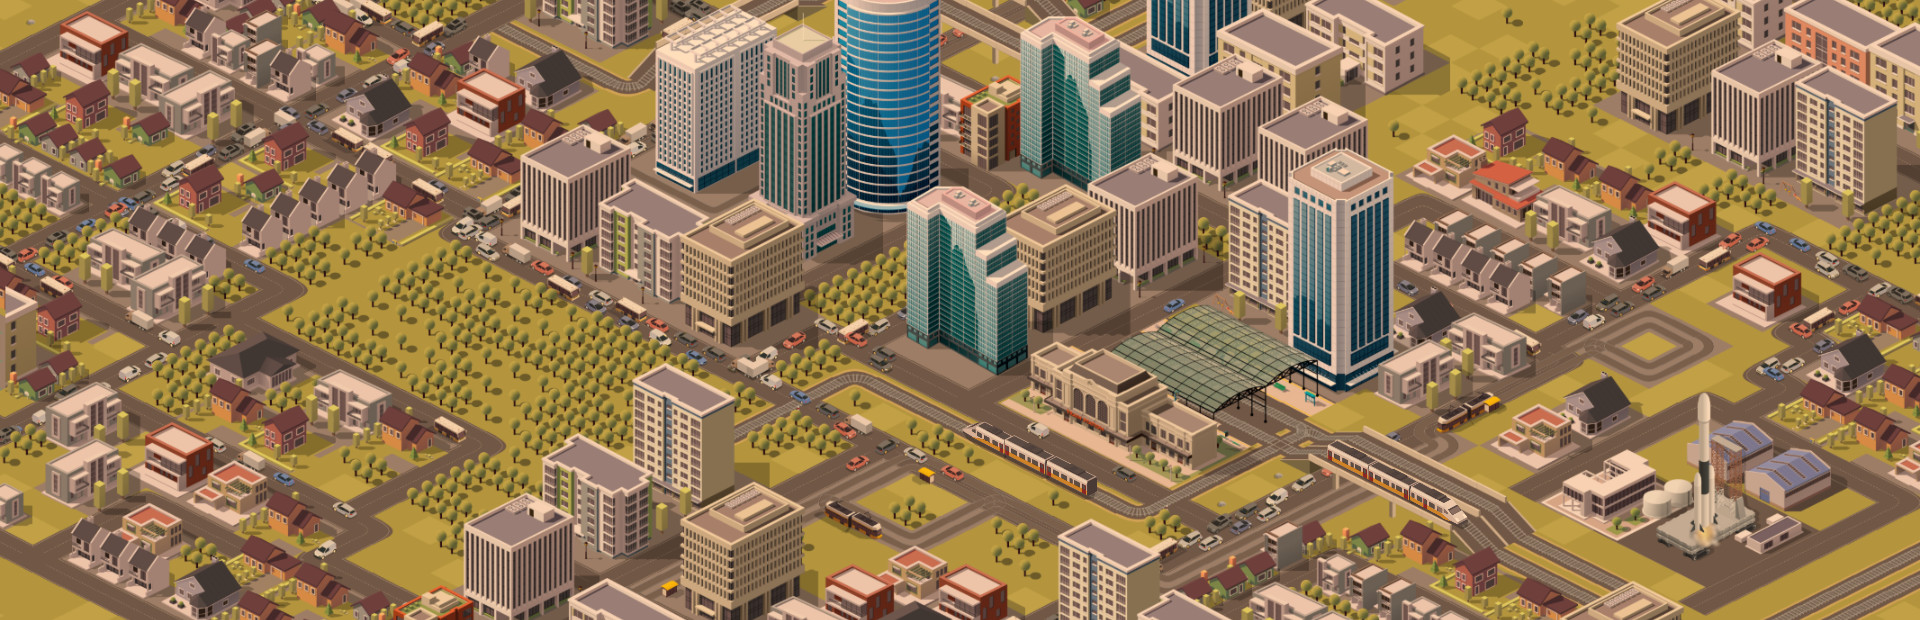 Smart City Plan cover image